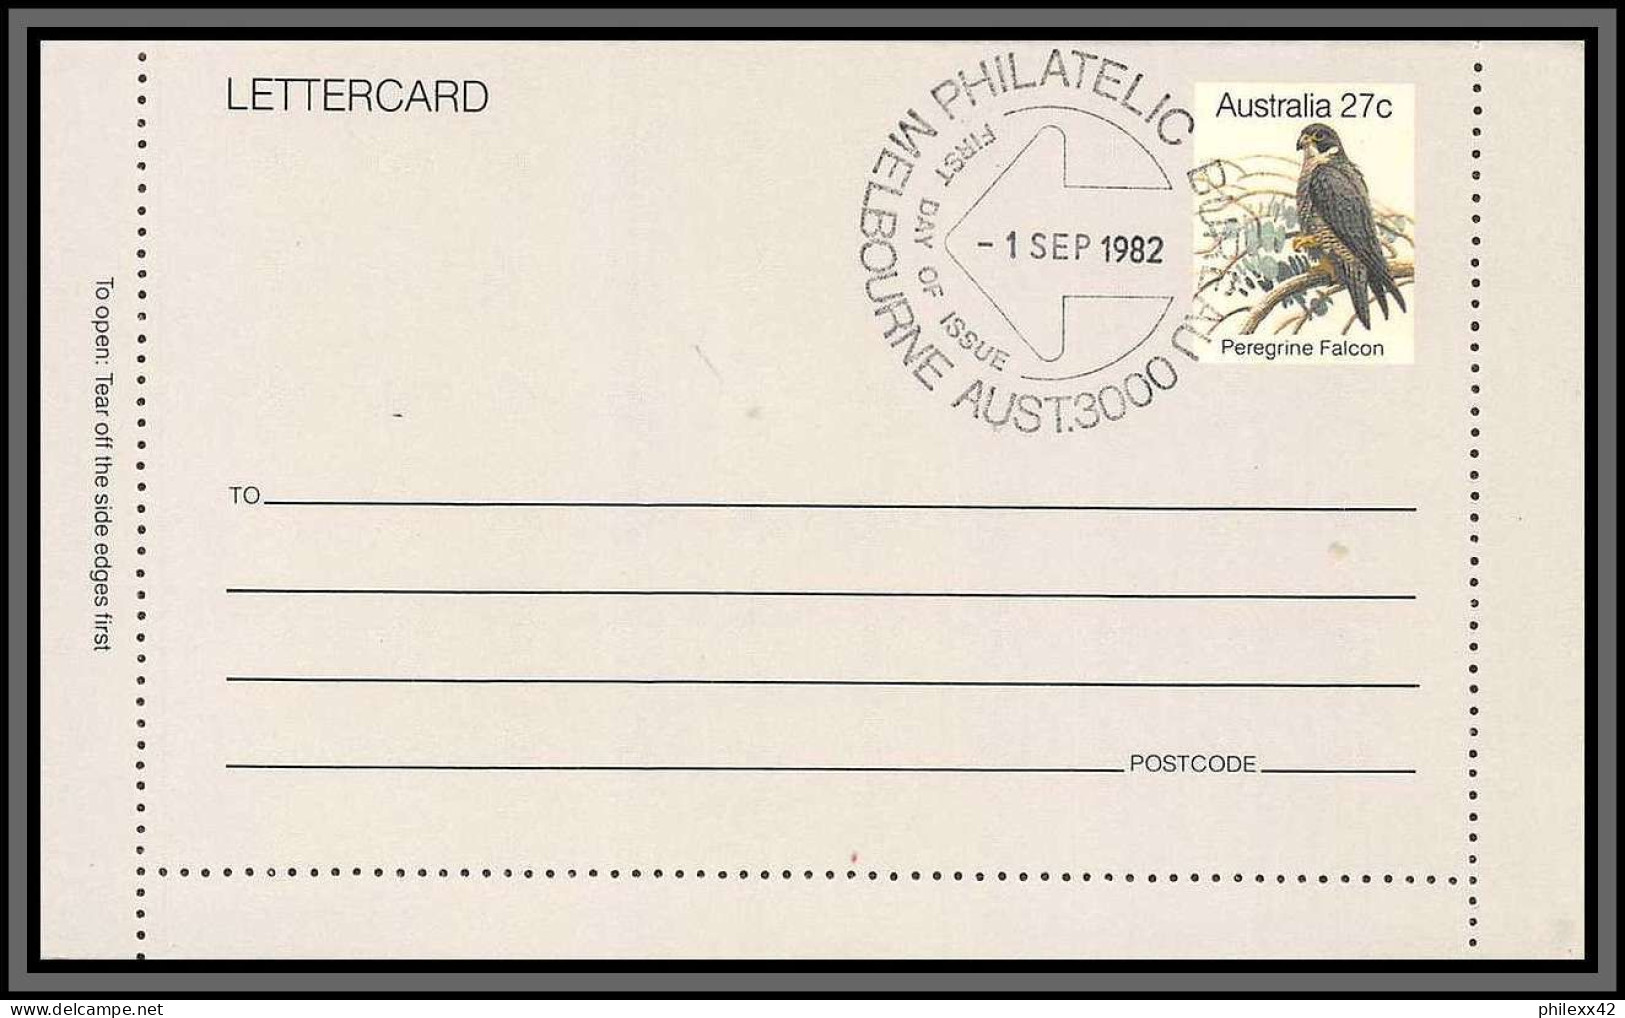 11253 PEREGRINE FALCON Faucon Pèlerin 1982 Entier Stationery Letter Card Australie Australia  - Postal Stationery